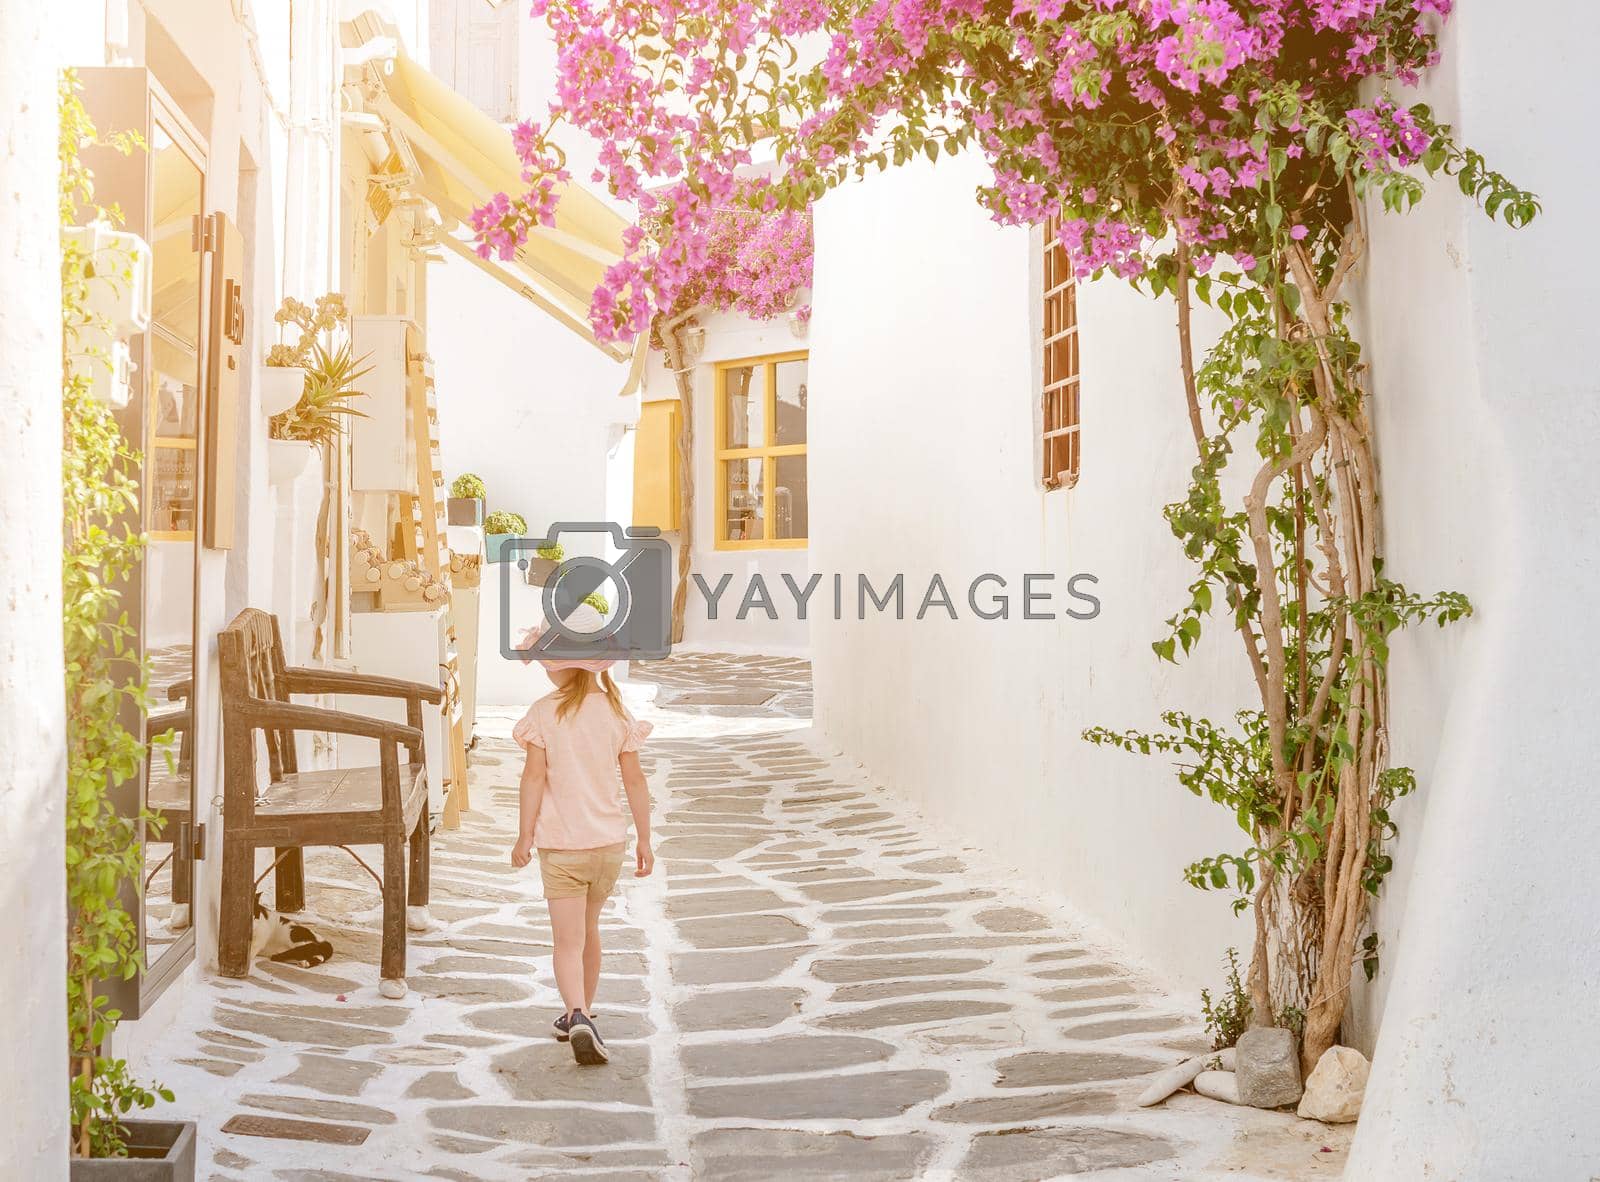 Royalty free image of Little girl walking the narrow alley in Greece by tan4ikk1